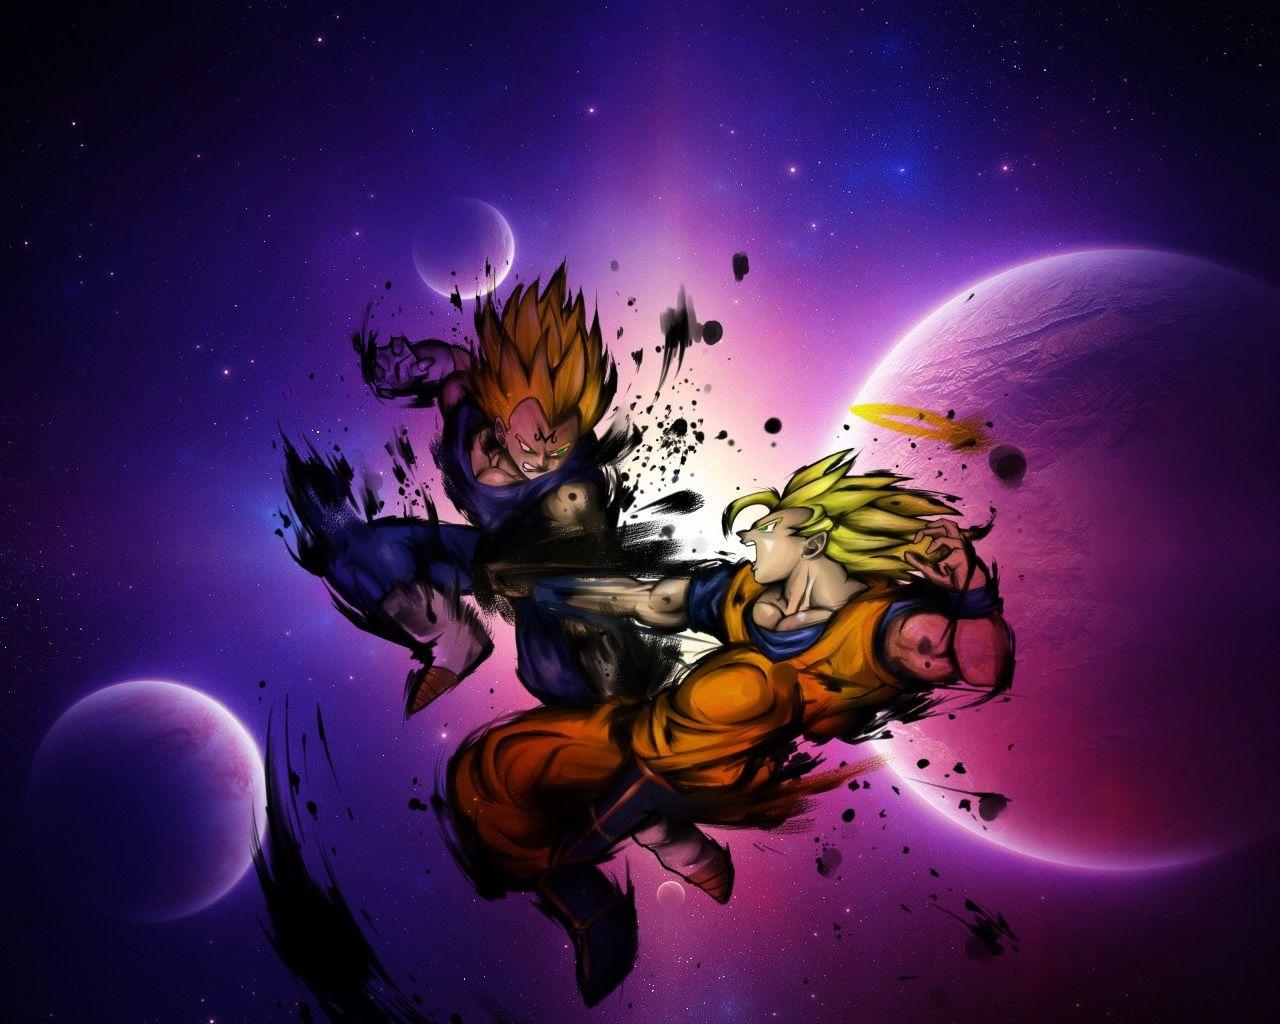 Goku vs Vegeta space wallpaper merge. My easy PhotoEdits